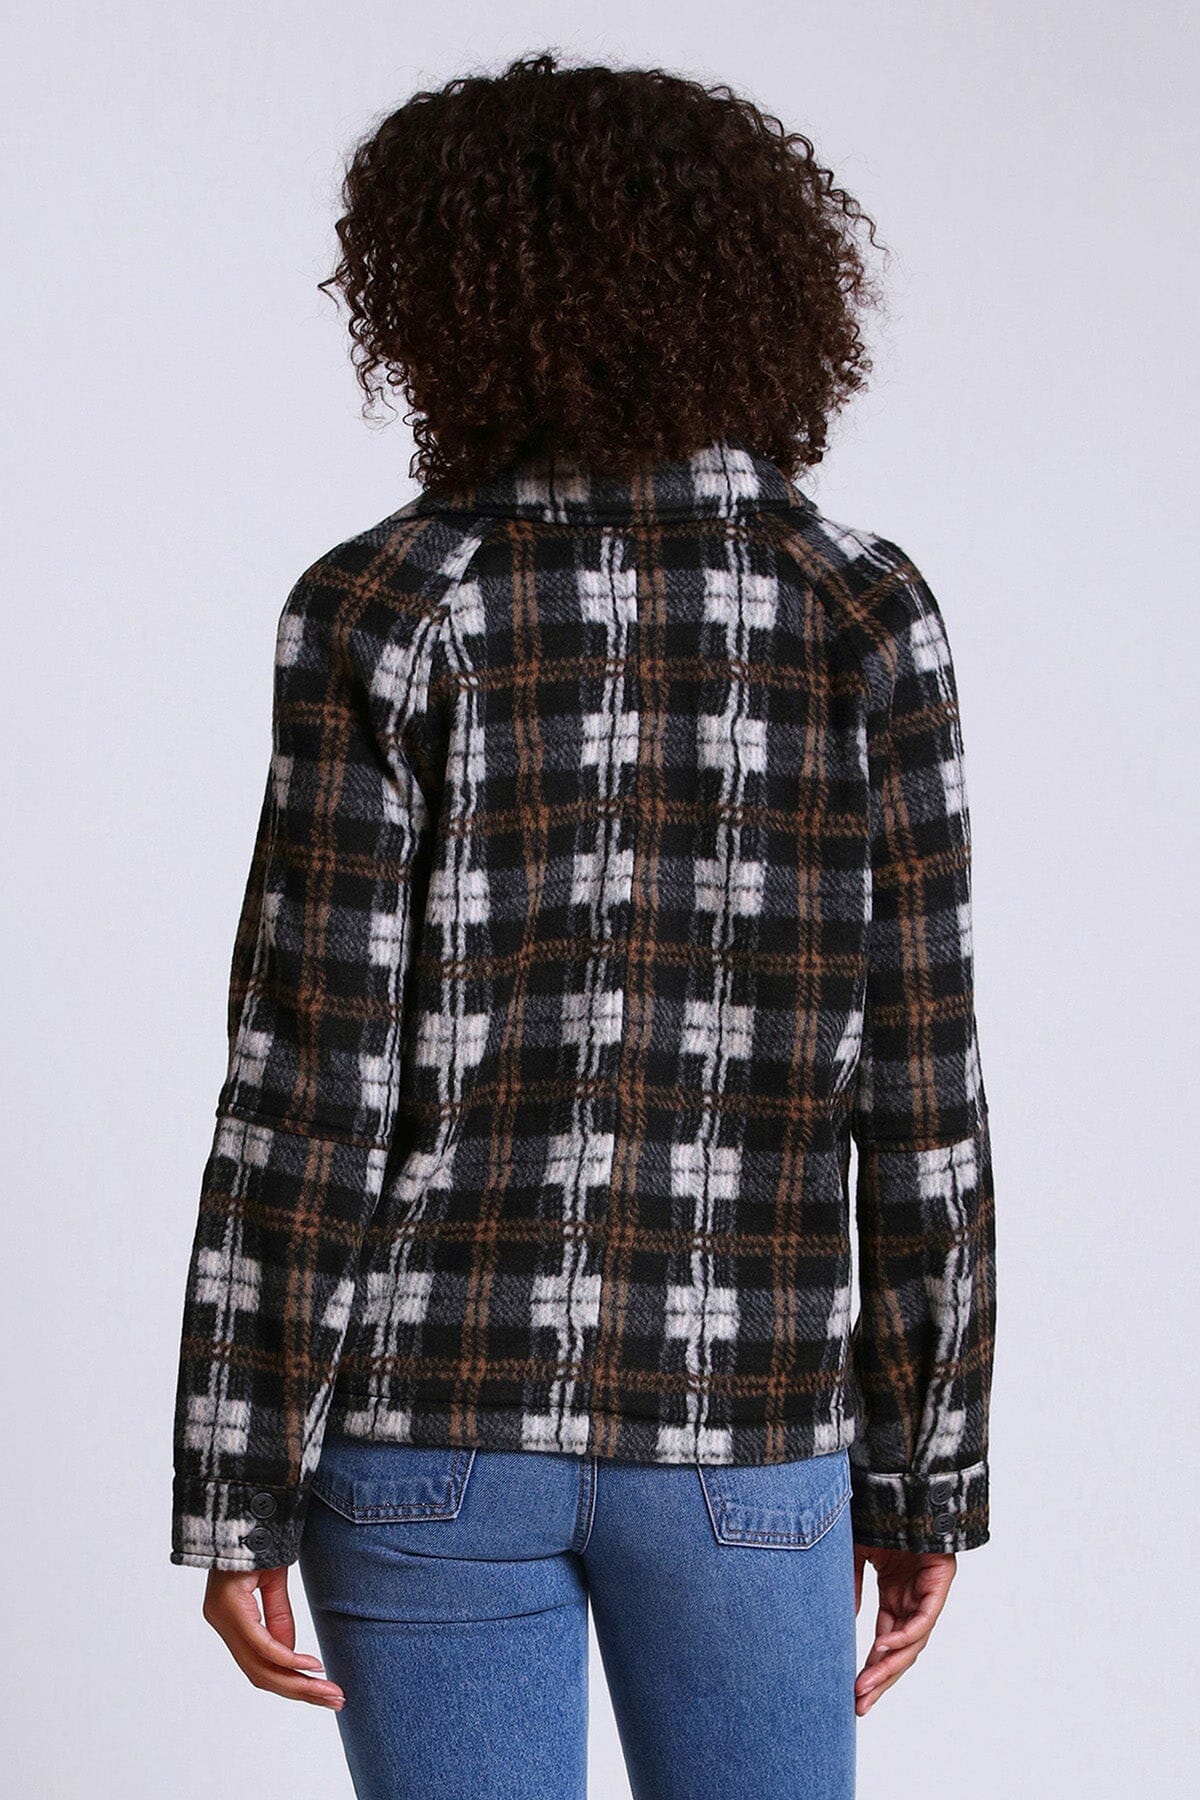 printed full zip up front jacket shacket coat brown black white plaid - 